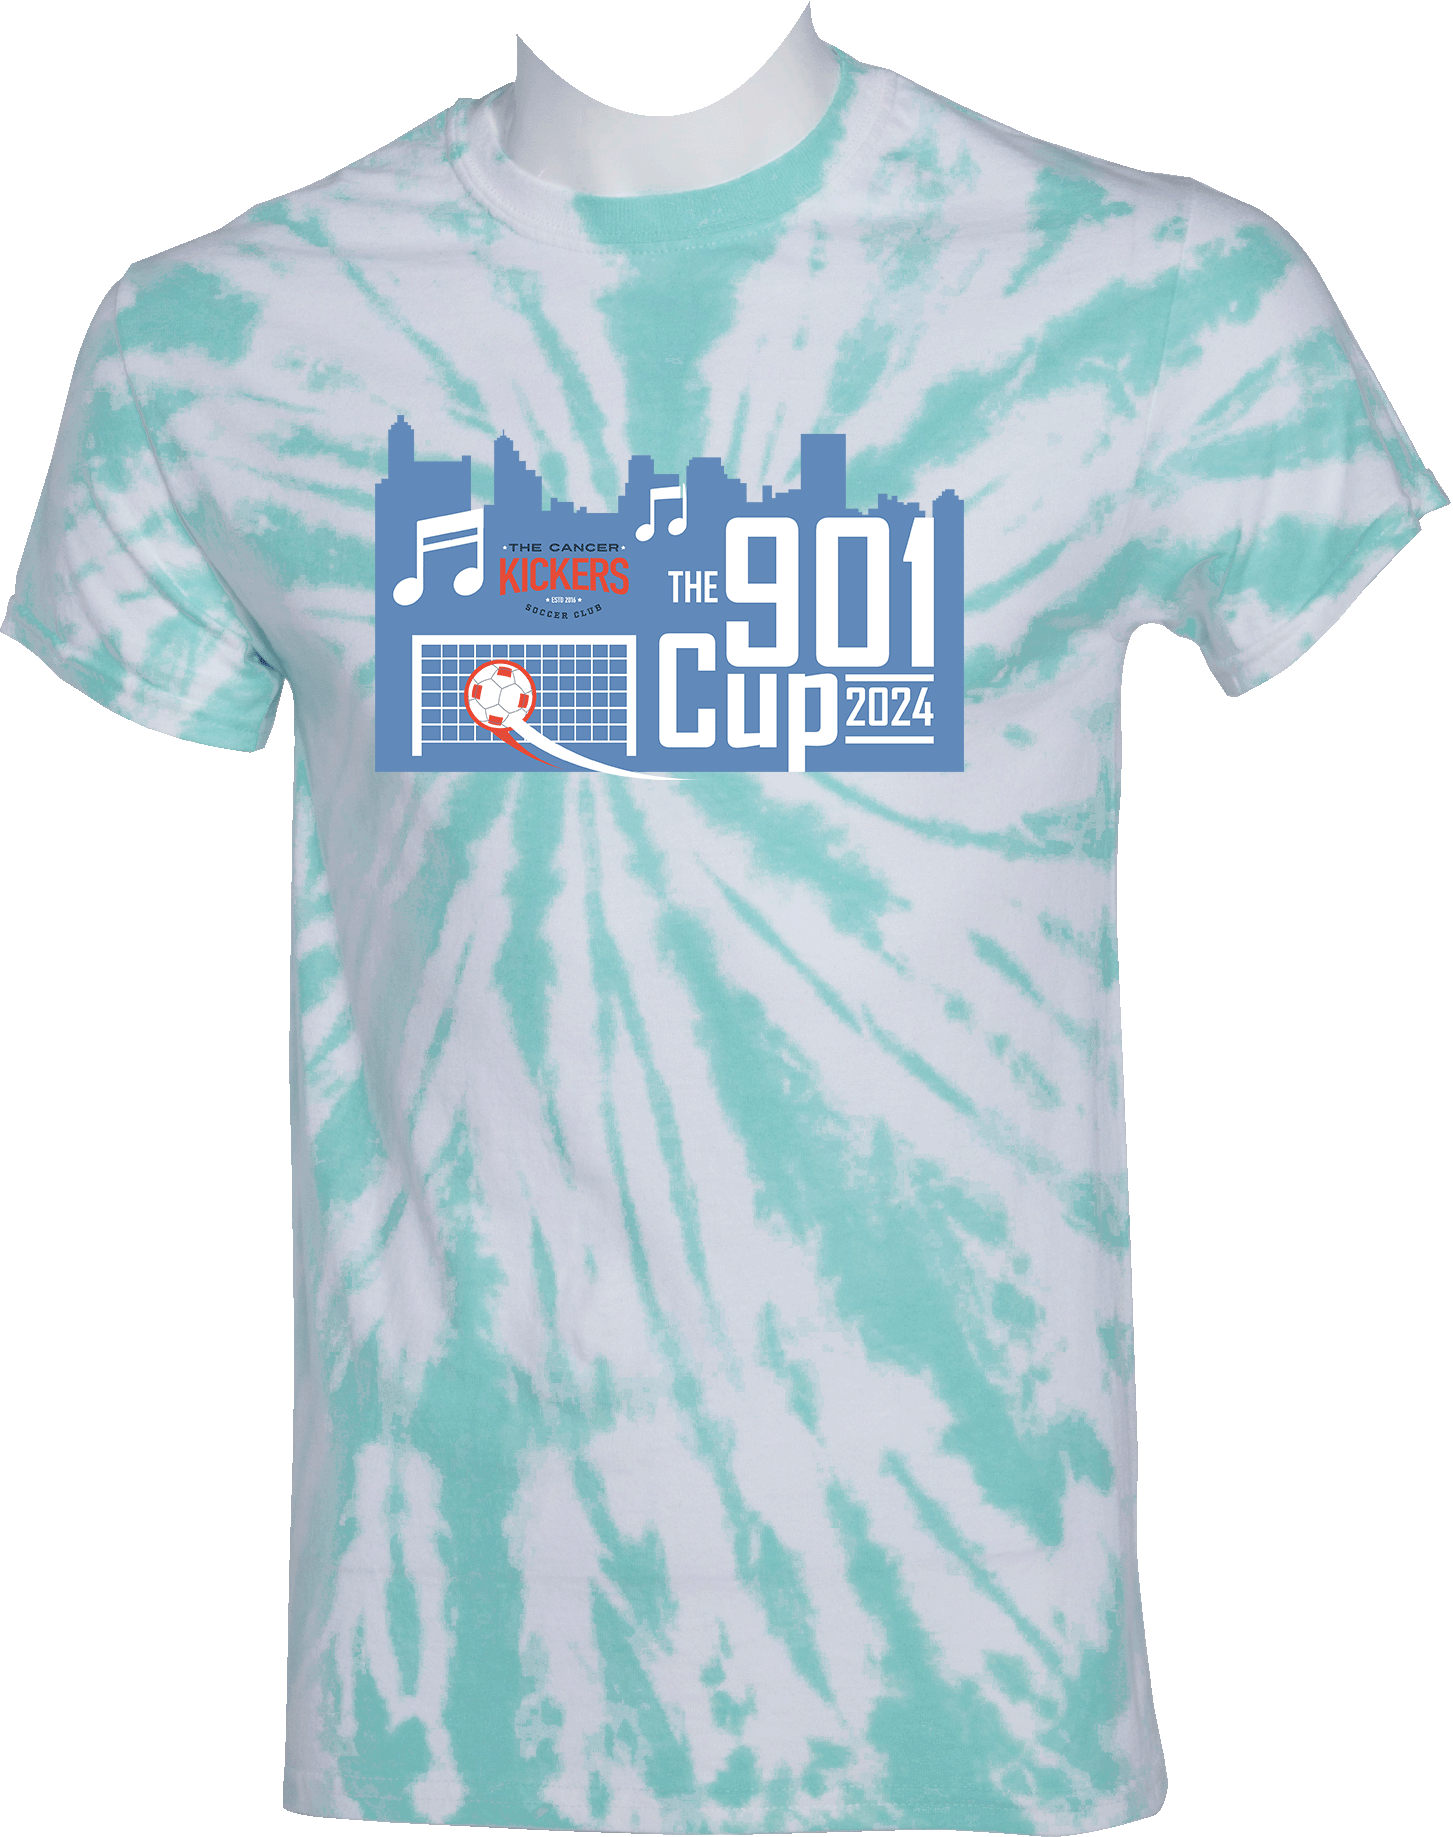 Tie-Dye Short Sleeves - 2024 The 901 Cup